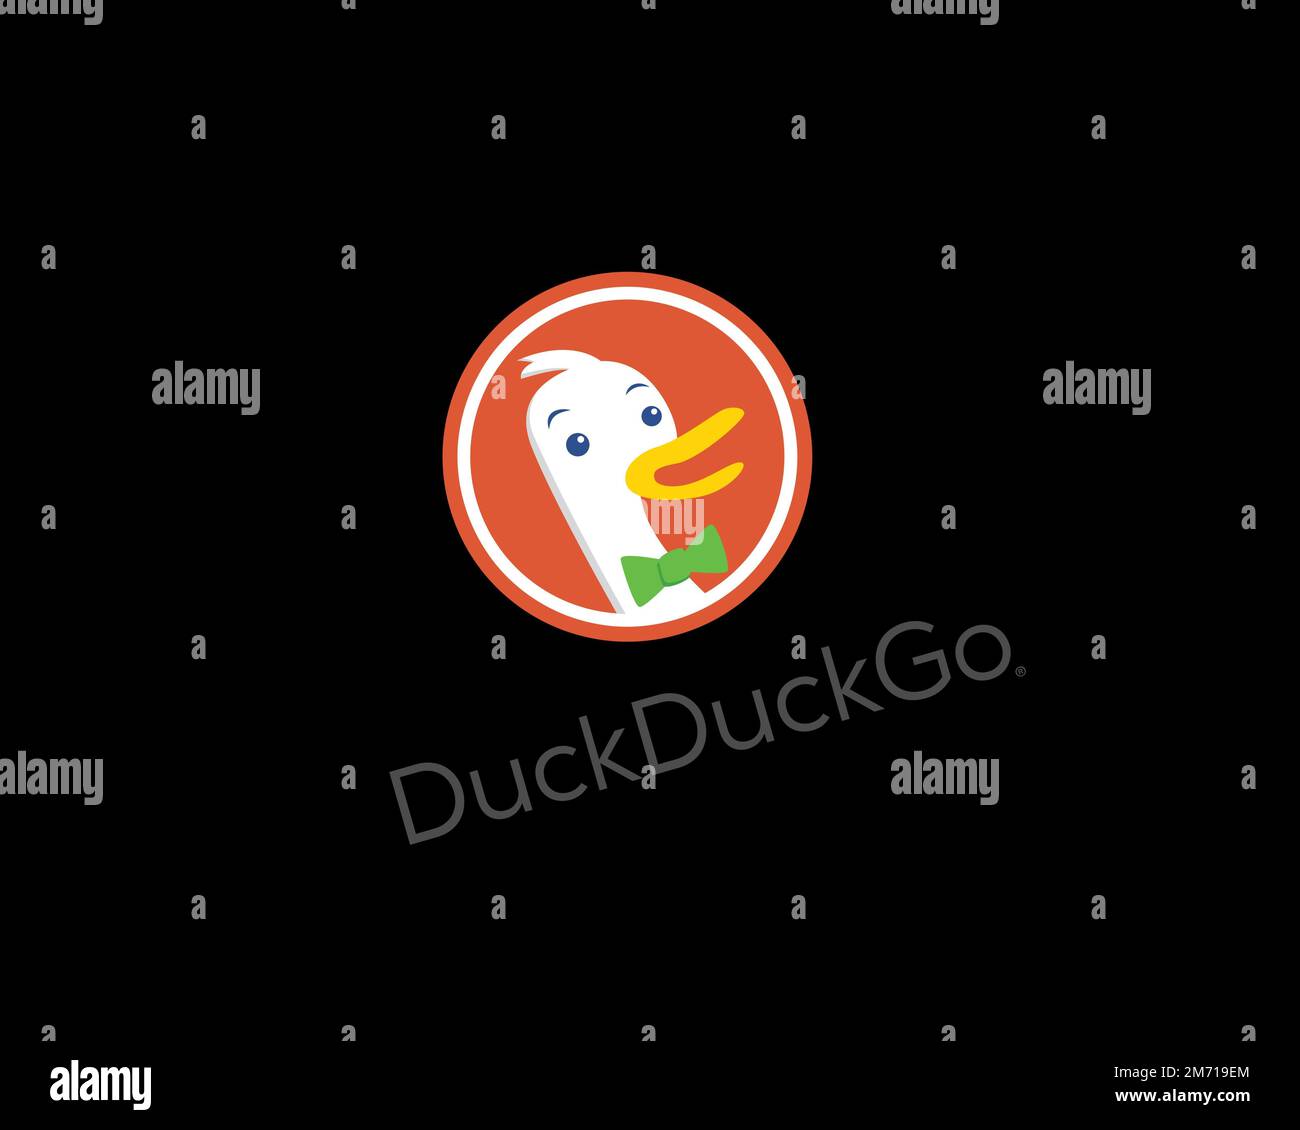 DuckDuckGo, rotated logo, black background Stock Photo